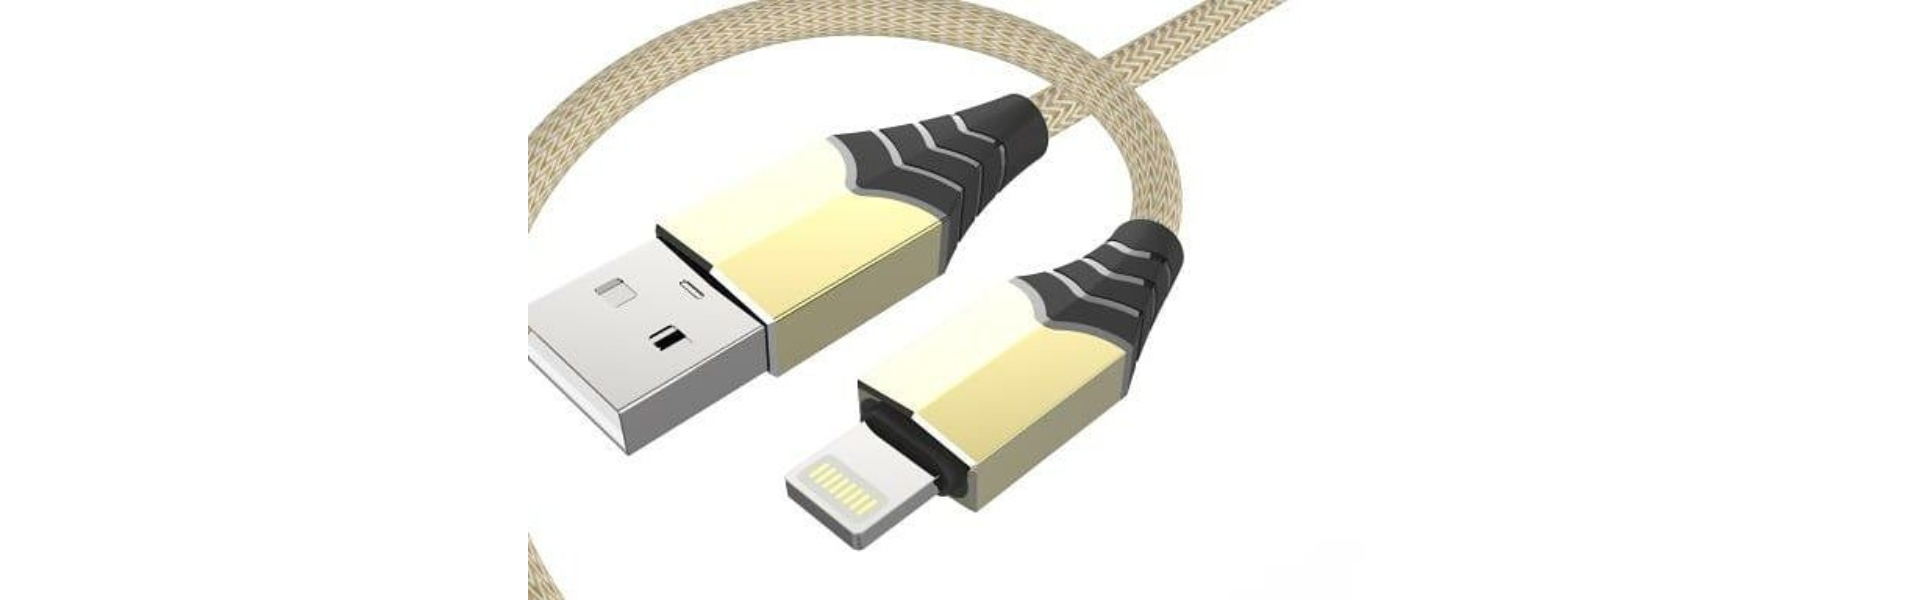 USB kaabel, USB andmekaabel, andmekaabel,Dong Guan Rong Pin Electronic Technology Co.Ltd